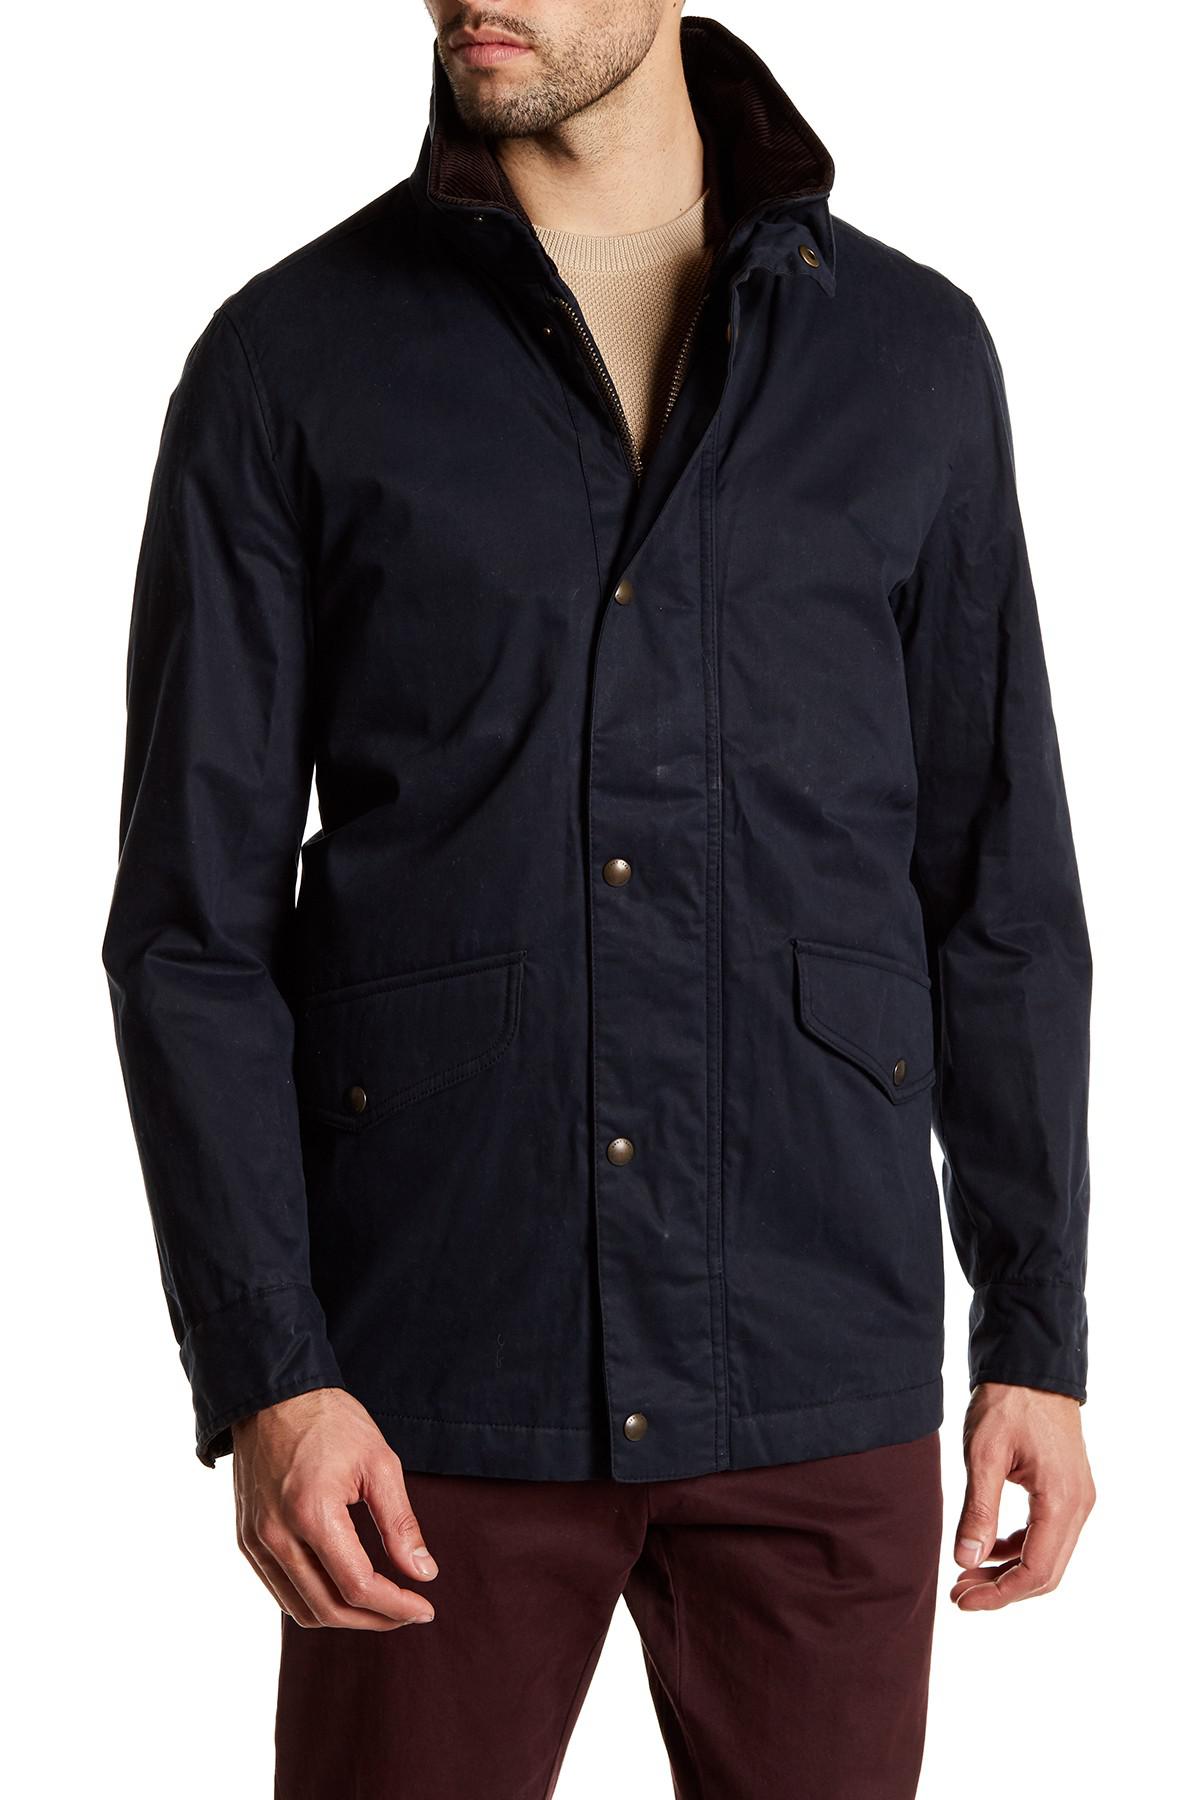 GANT Cotton The Double Decker Jacket in Navy (Blue) for Men - Lyst